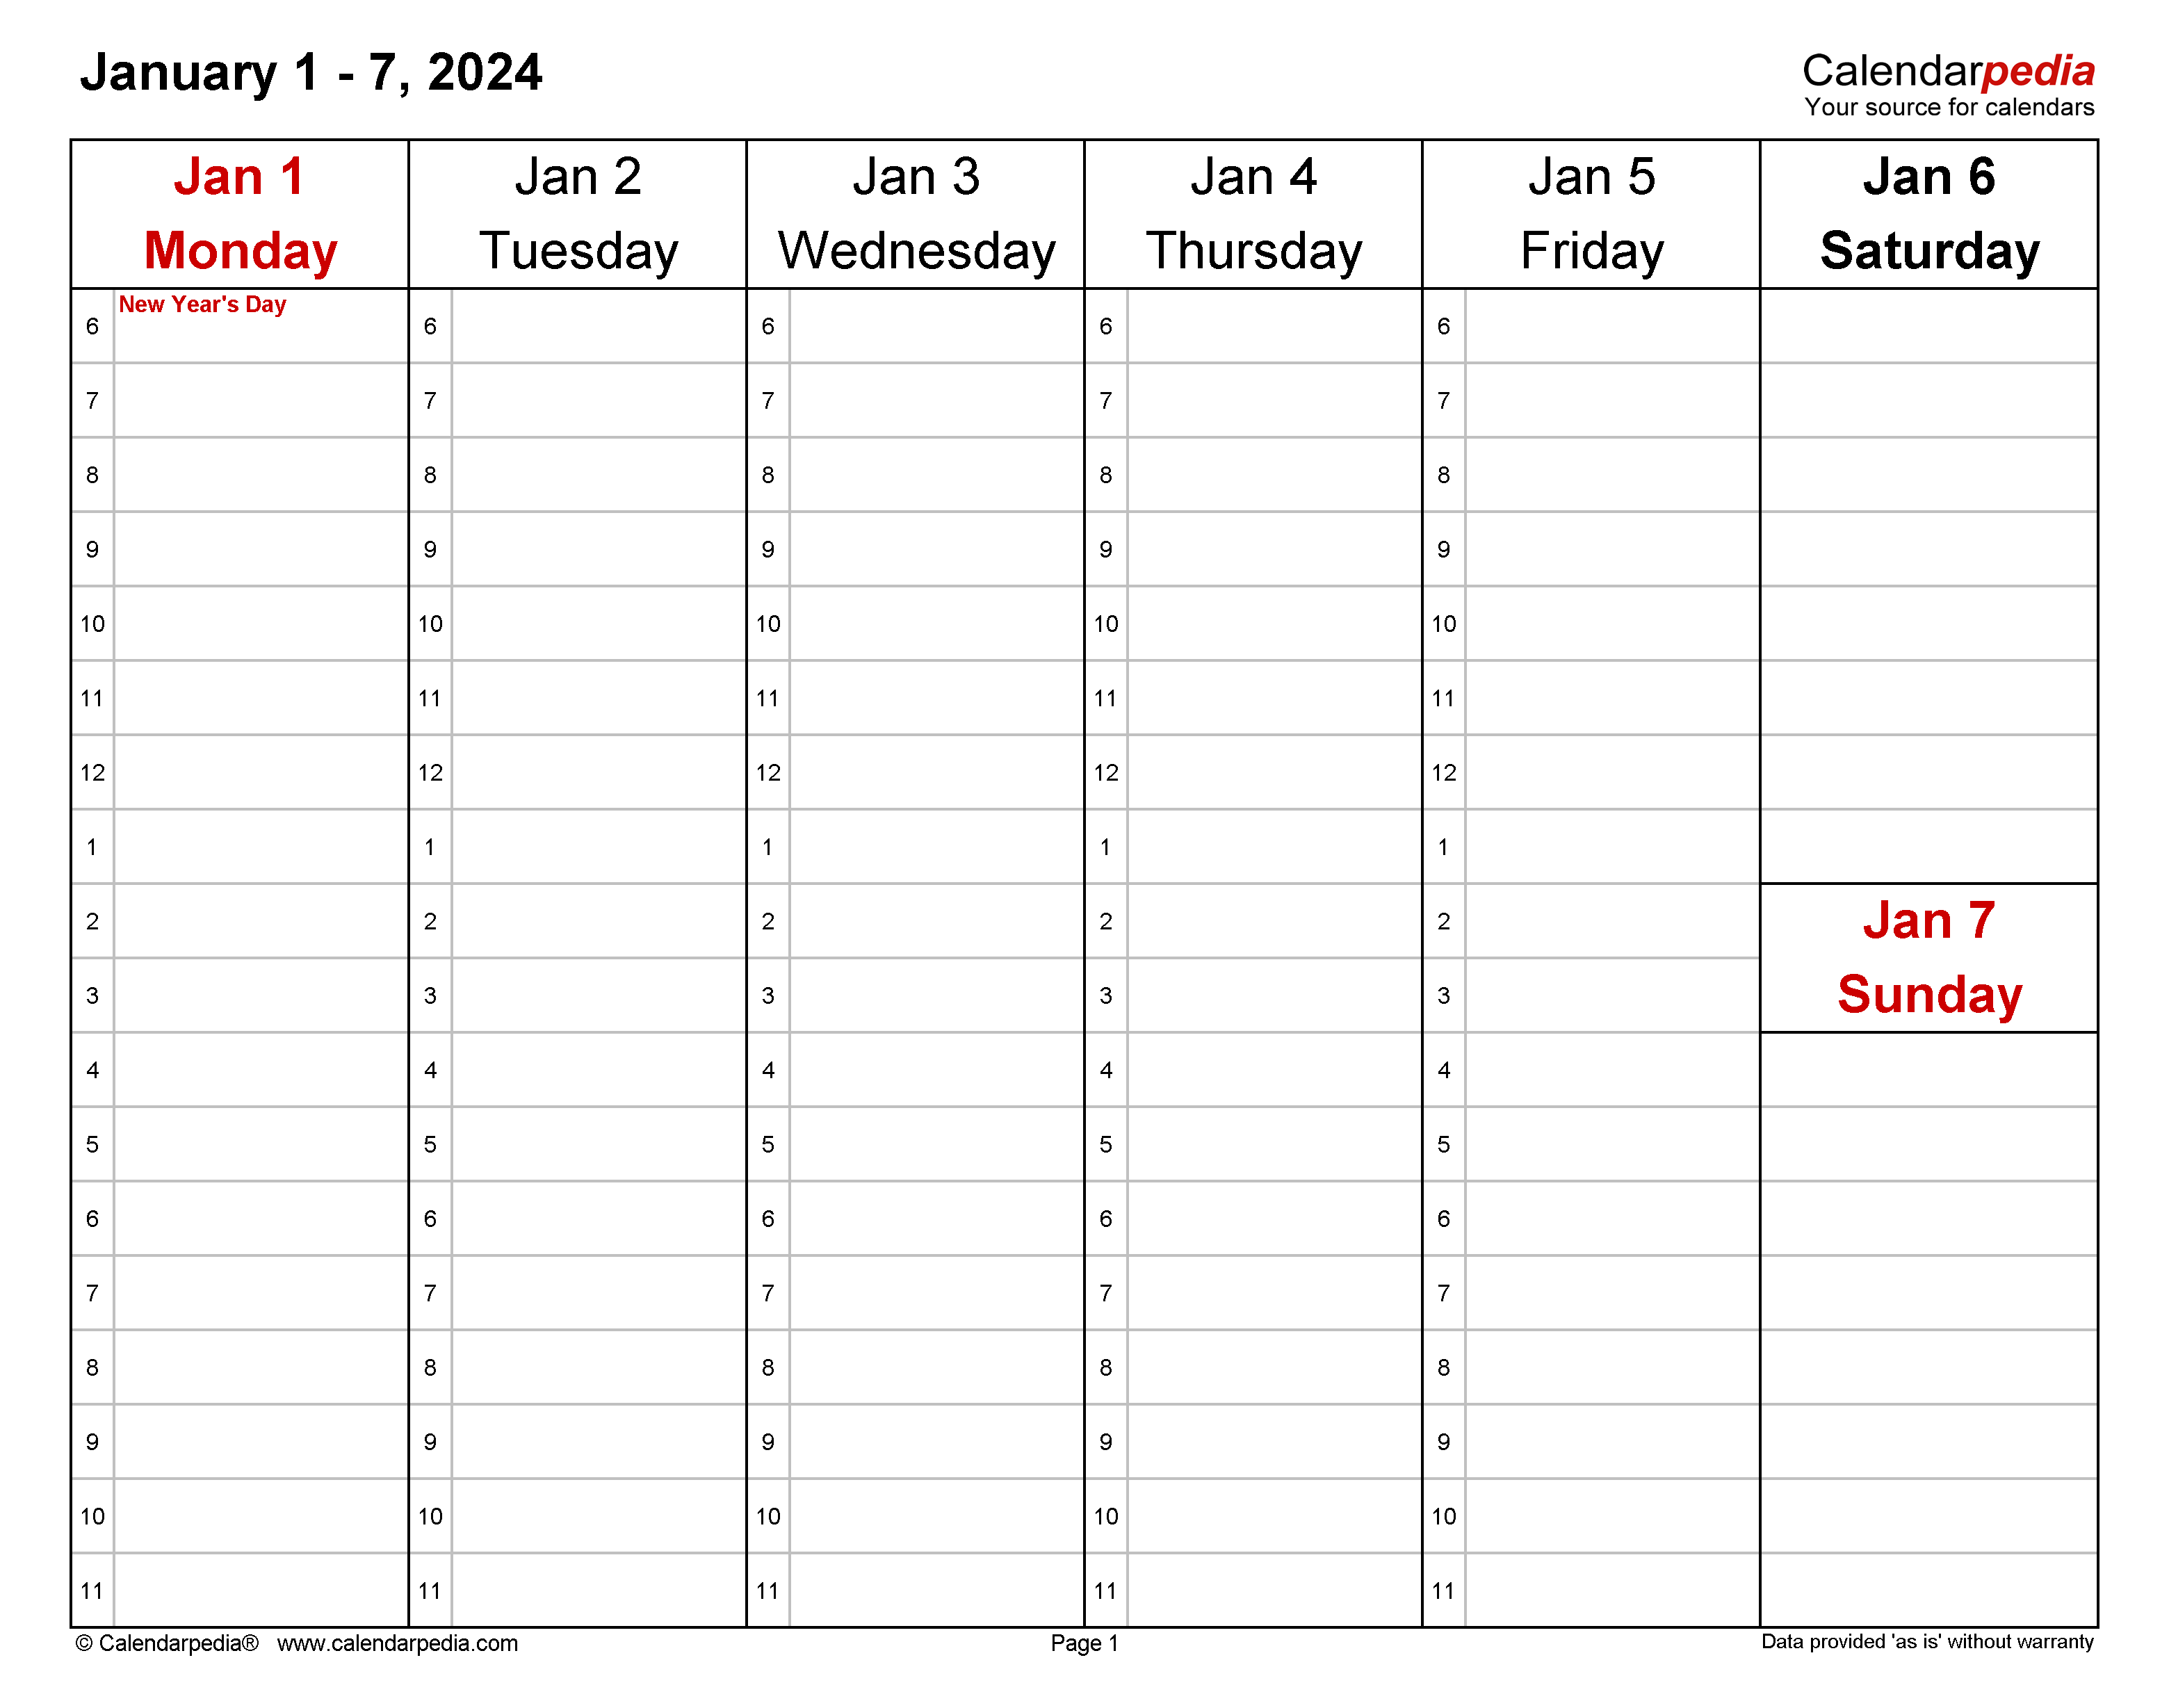 Weekly Calendars 2024 For Pdf - 12 Free Printable Templates intended for Free Printable Calendar 2024 With Time Slots